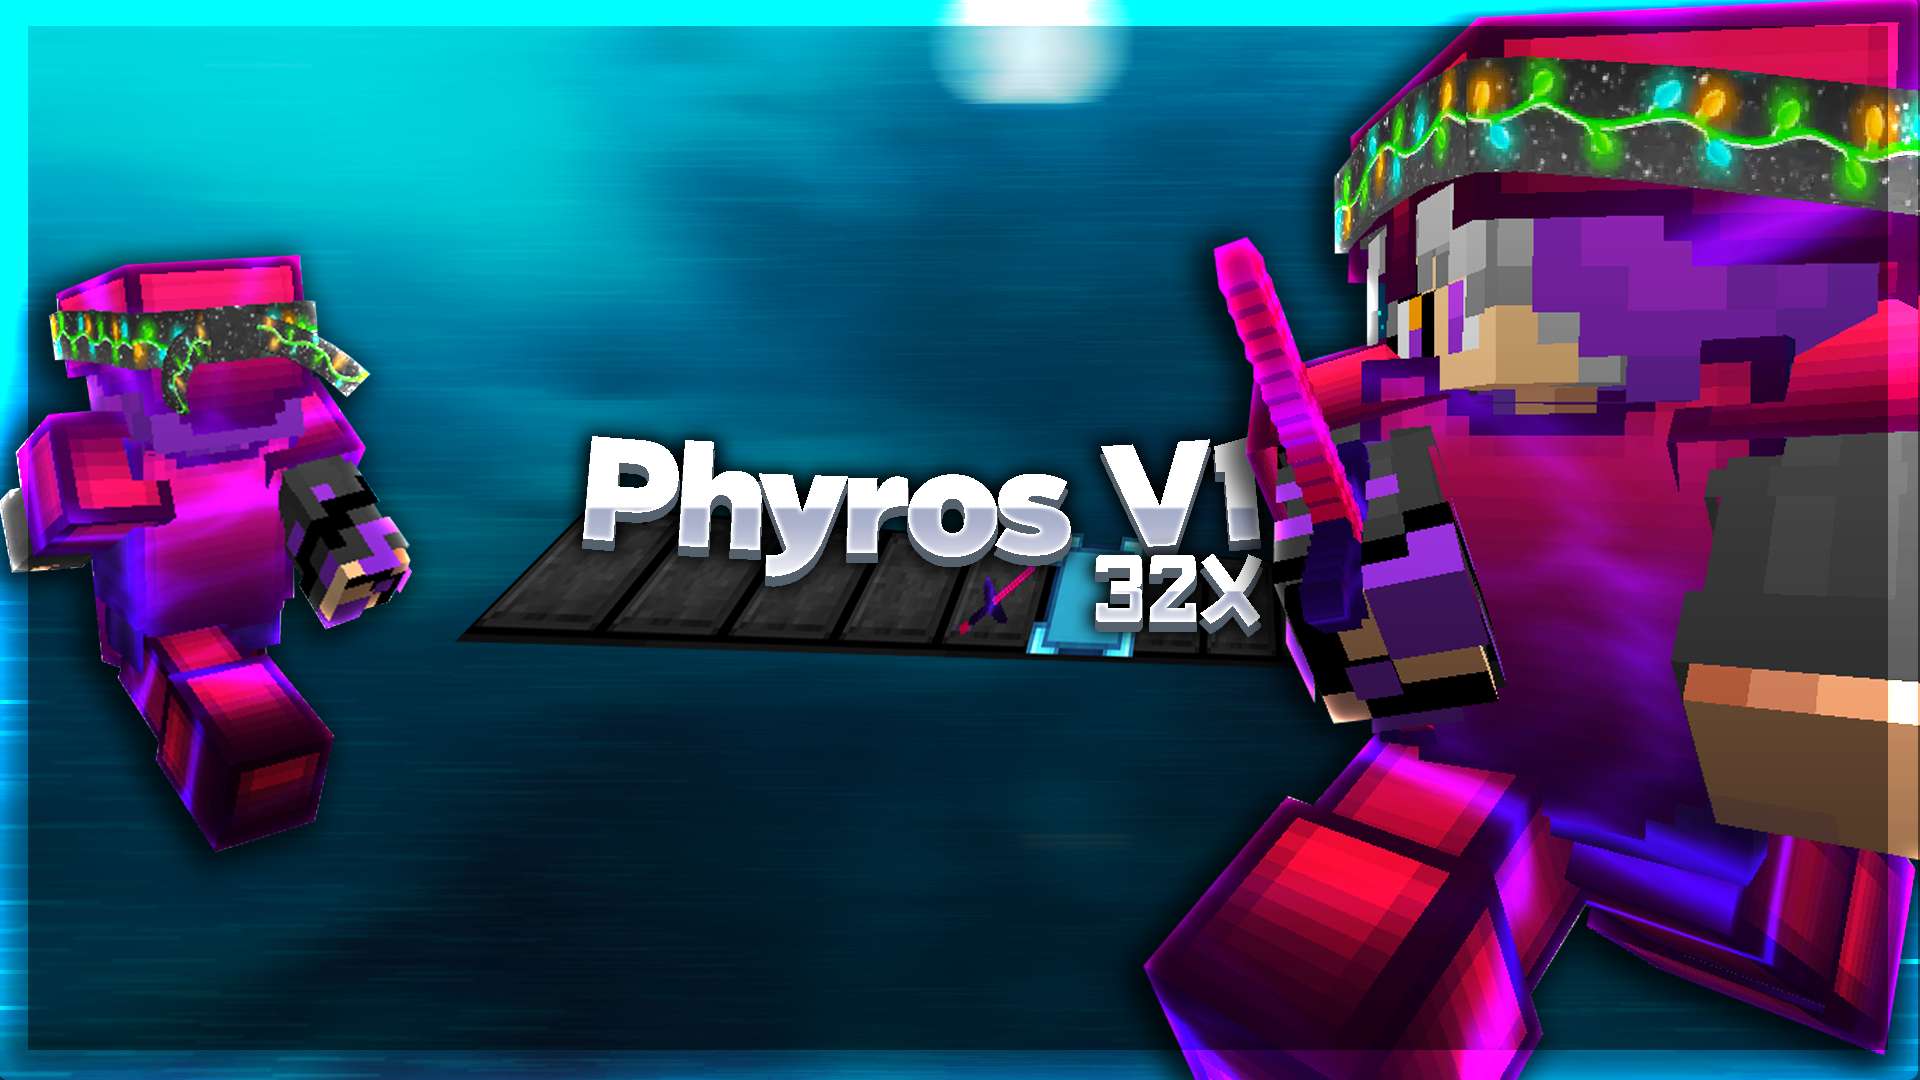 Phyros V1 32x by Phyros & 38k__ on PvPRP